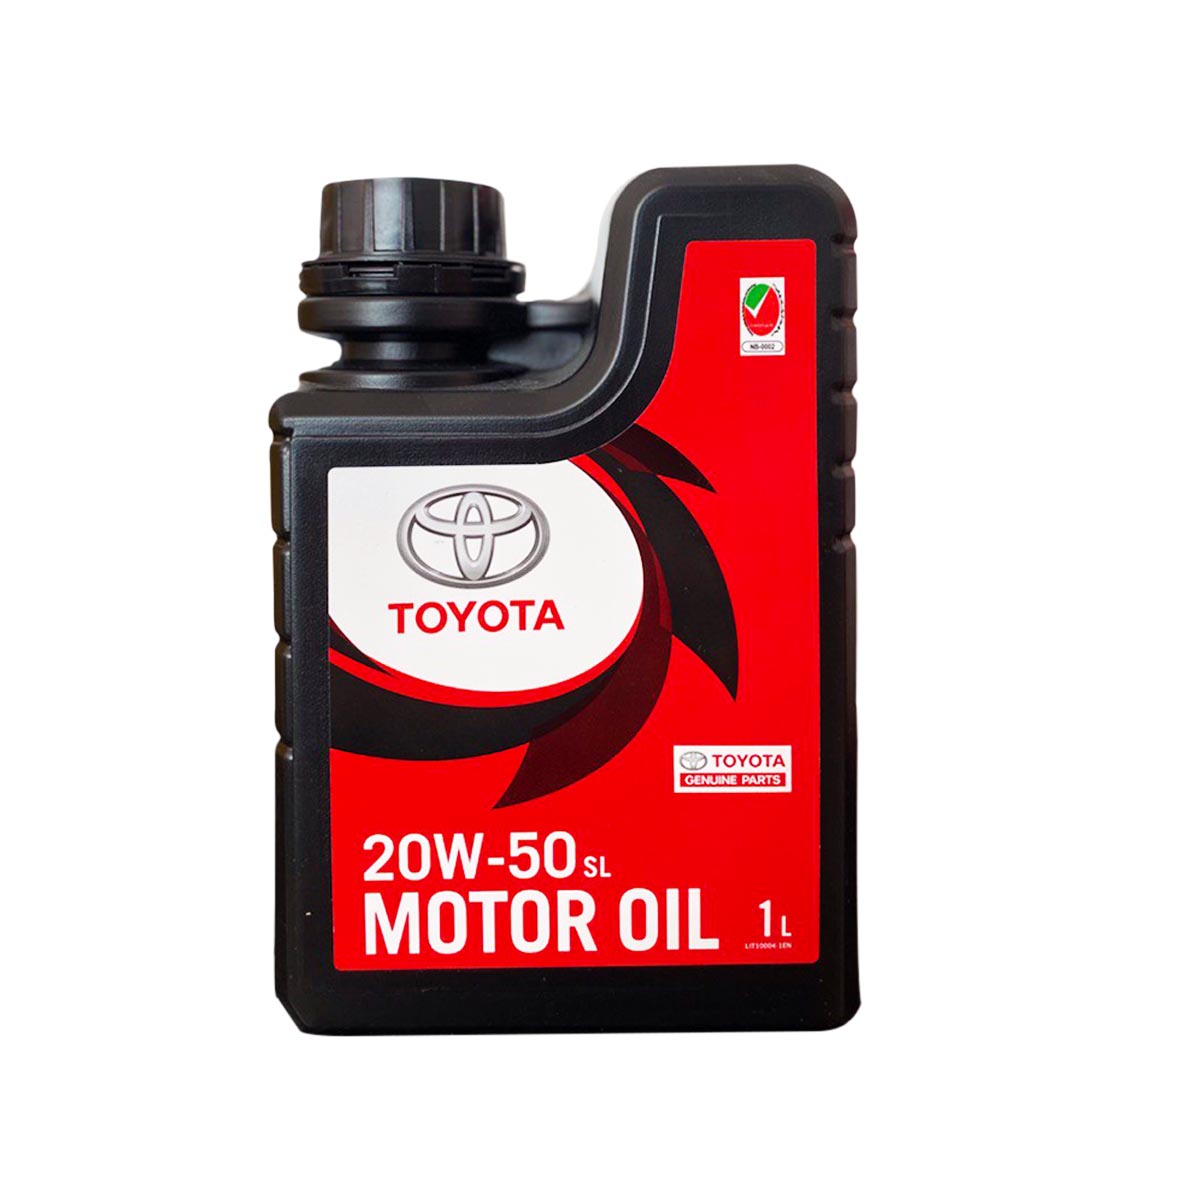 20w-50_motor_oil-TOYOTA